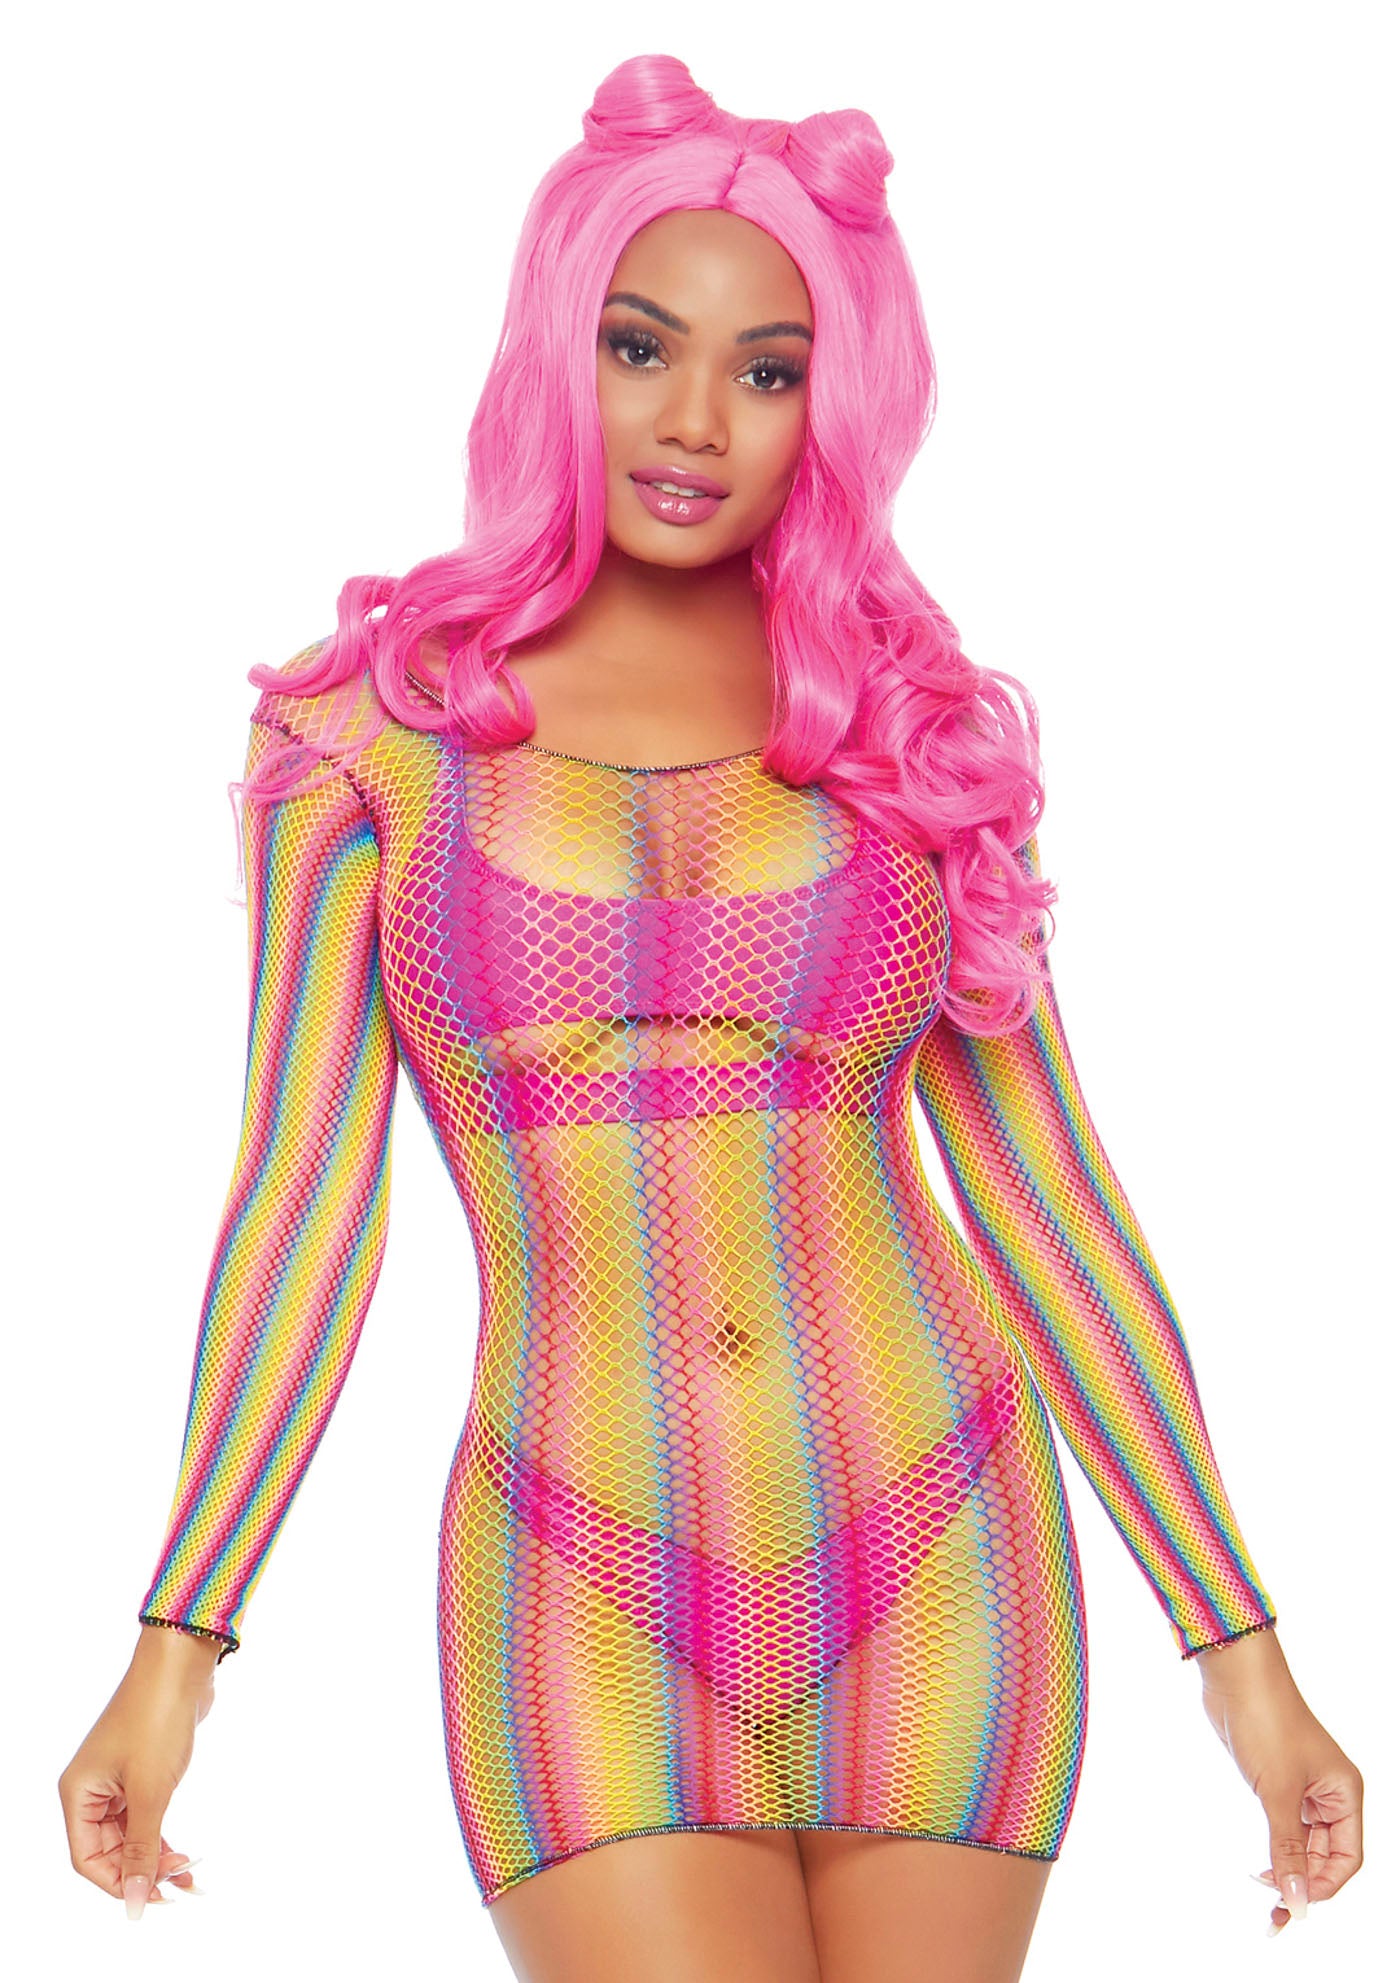 Leg Avenue 86795 Rainbow Fishnet Mini Dress - Striped multicoloured fishnet mini dress with scooped neck.